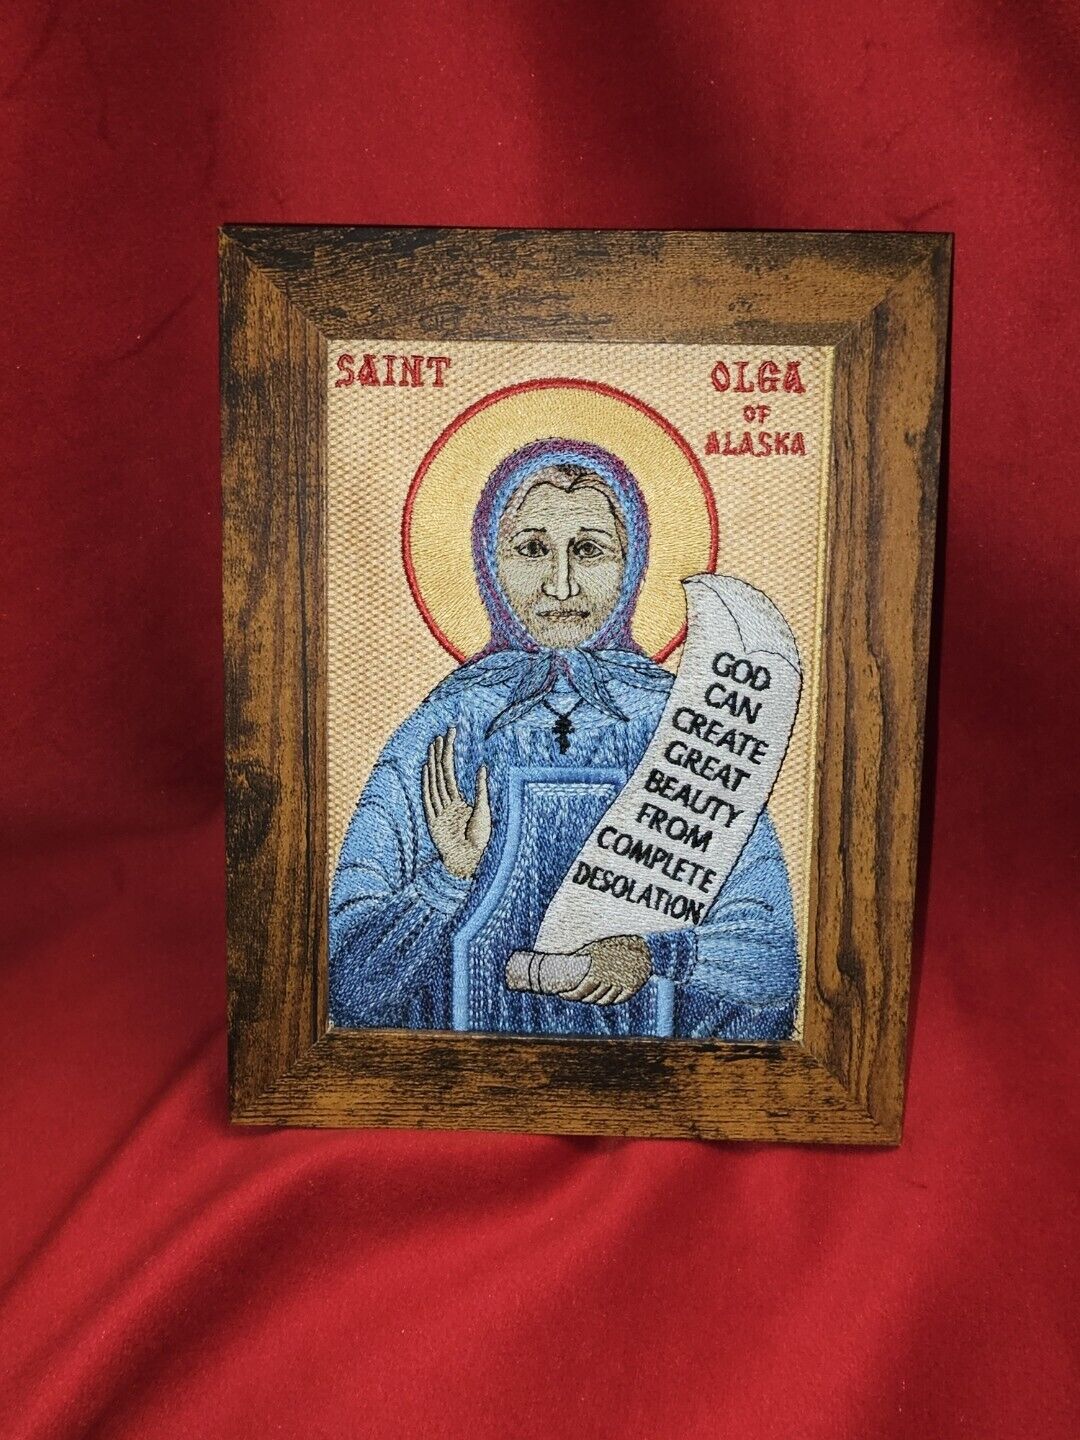 Saint Olga of Alaska - 5x7 Embroidered Byzantine Orthodox Icon